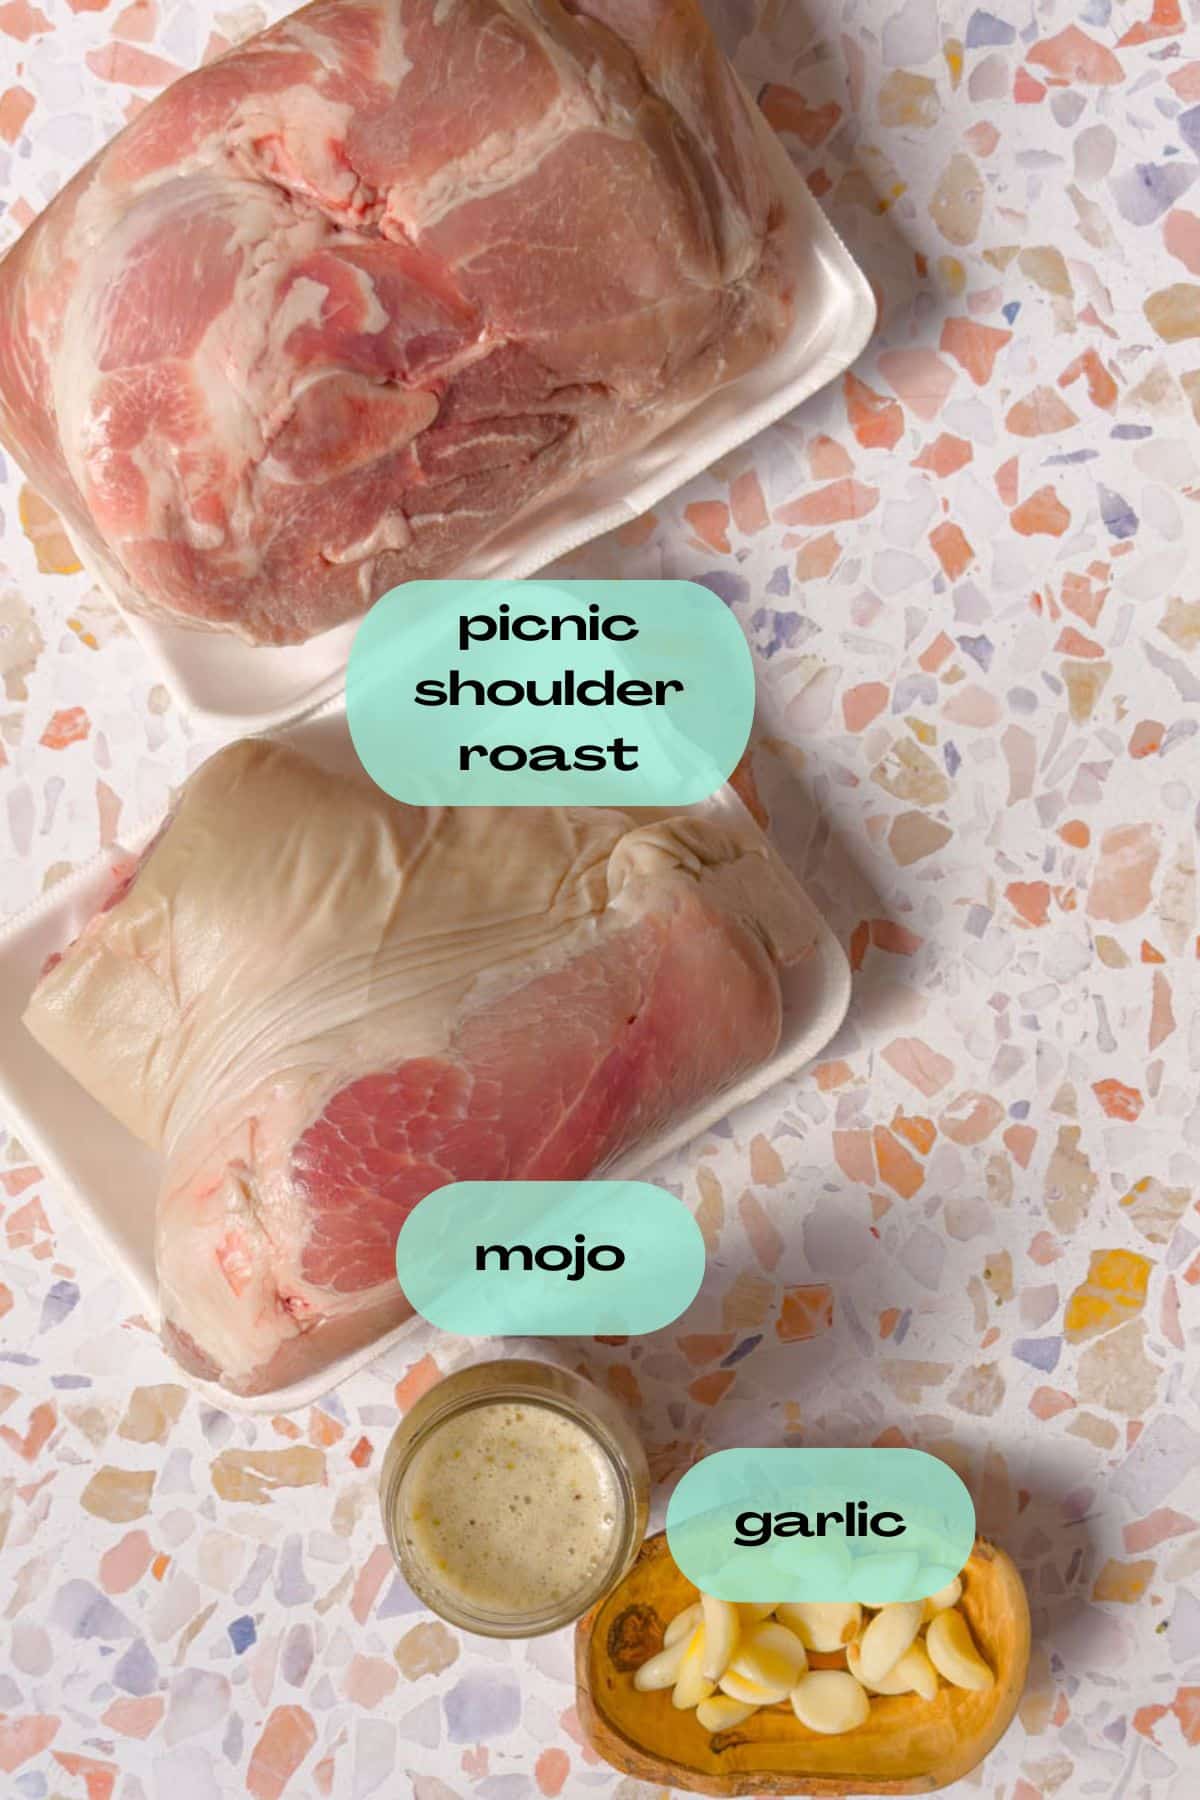 Ingredients to make pernil: Picnic Shoulder Roast, Mojo, and garlic.